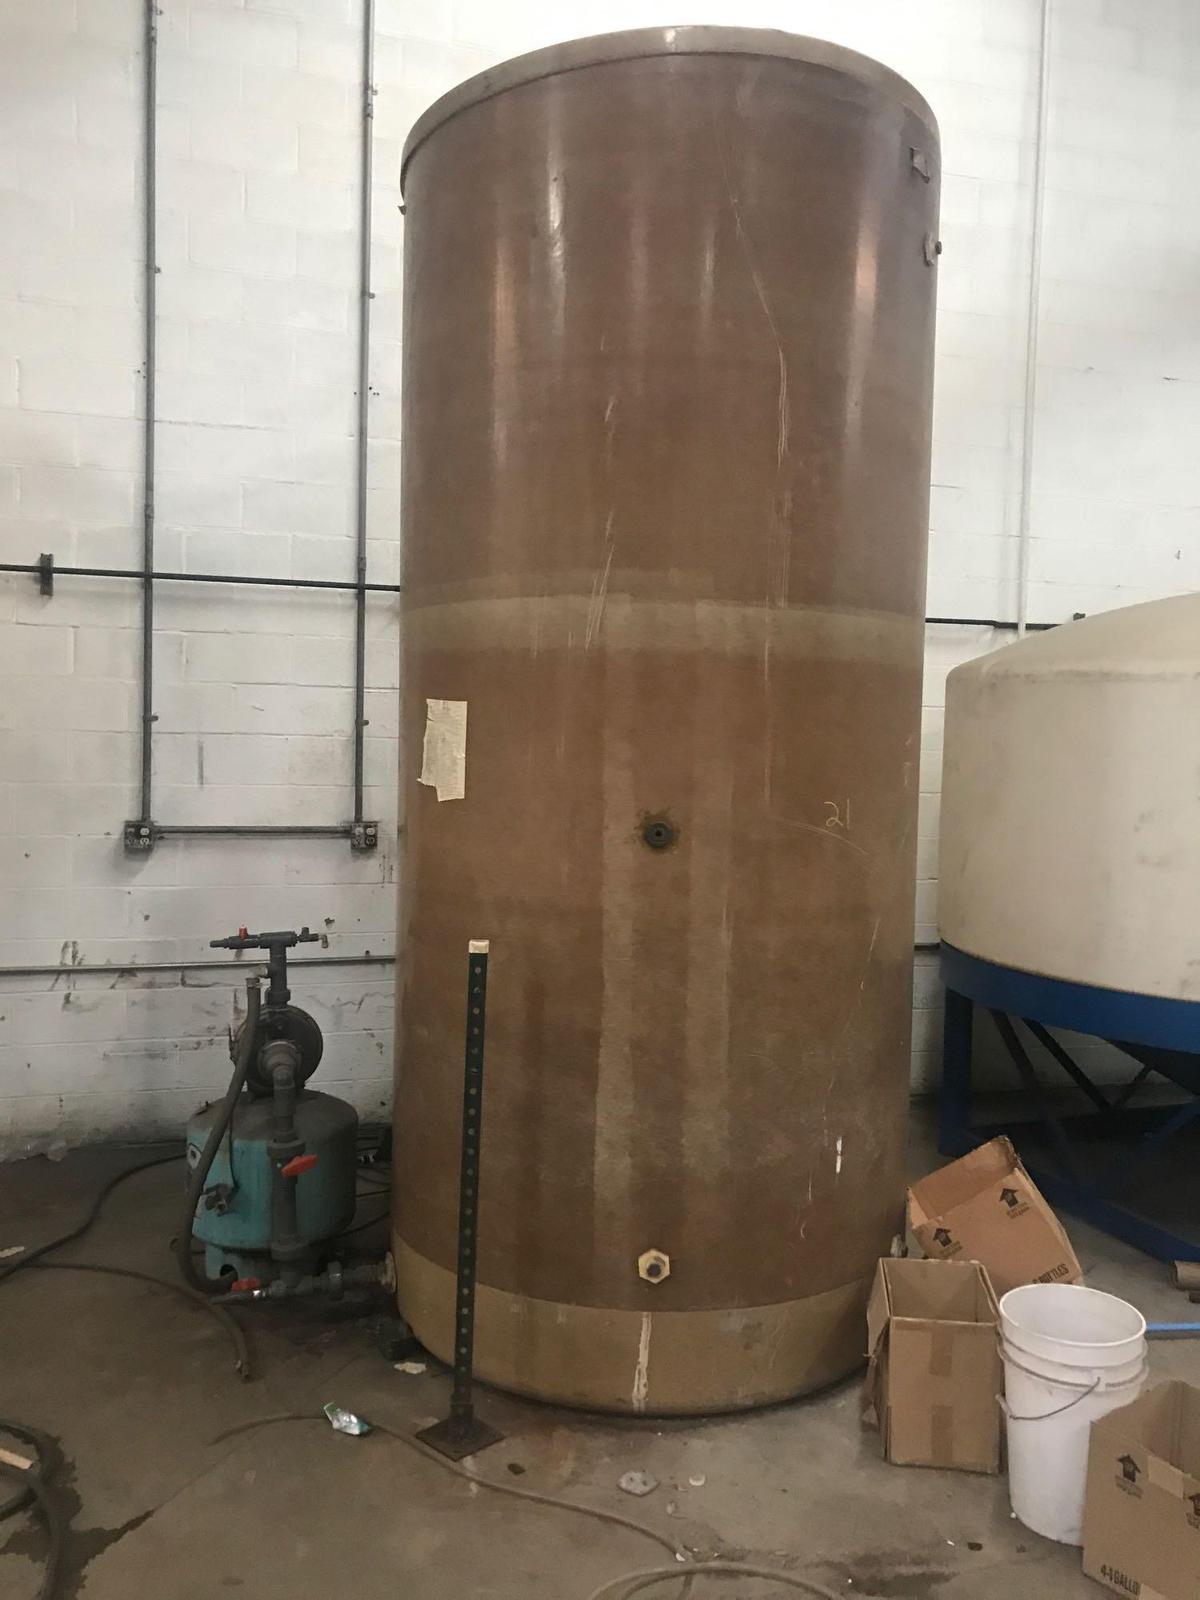 Approx 1000 gallon fiberglass holding tank